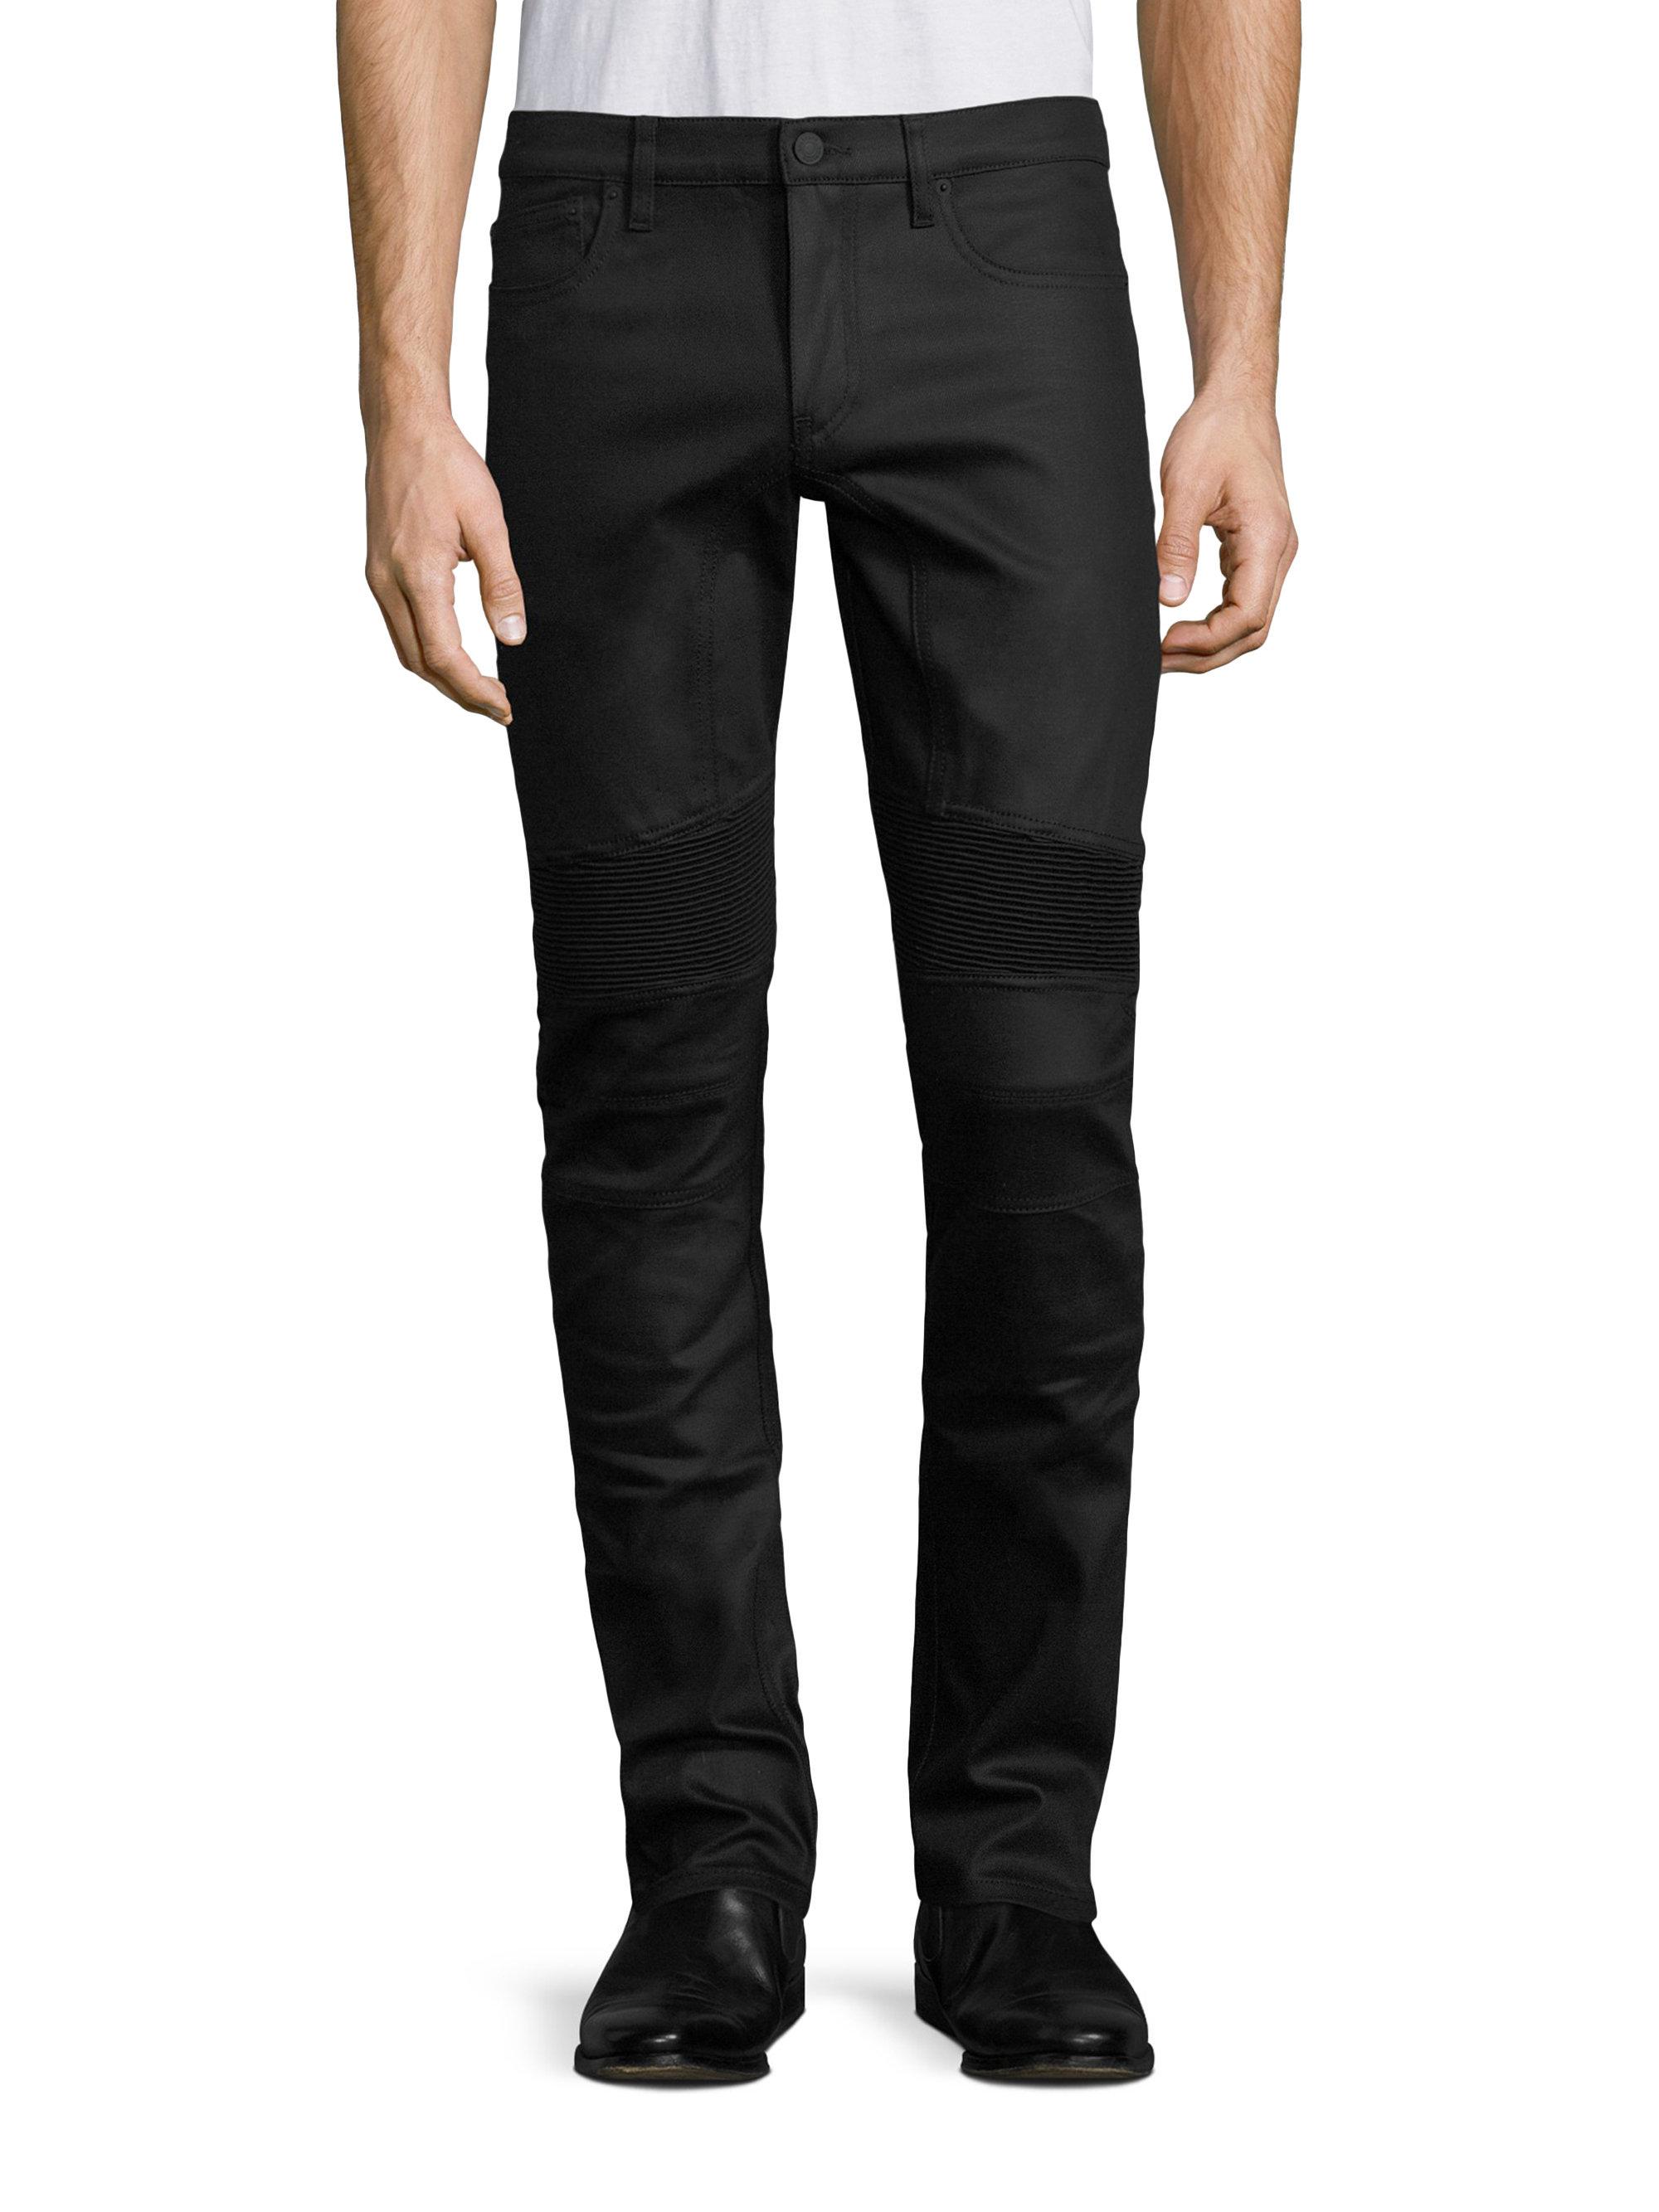 Lyst - Belstaff Eastham Slim-fit Jeans in Black for Men